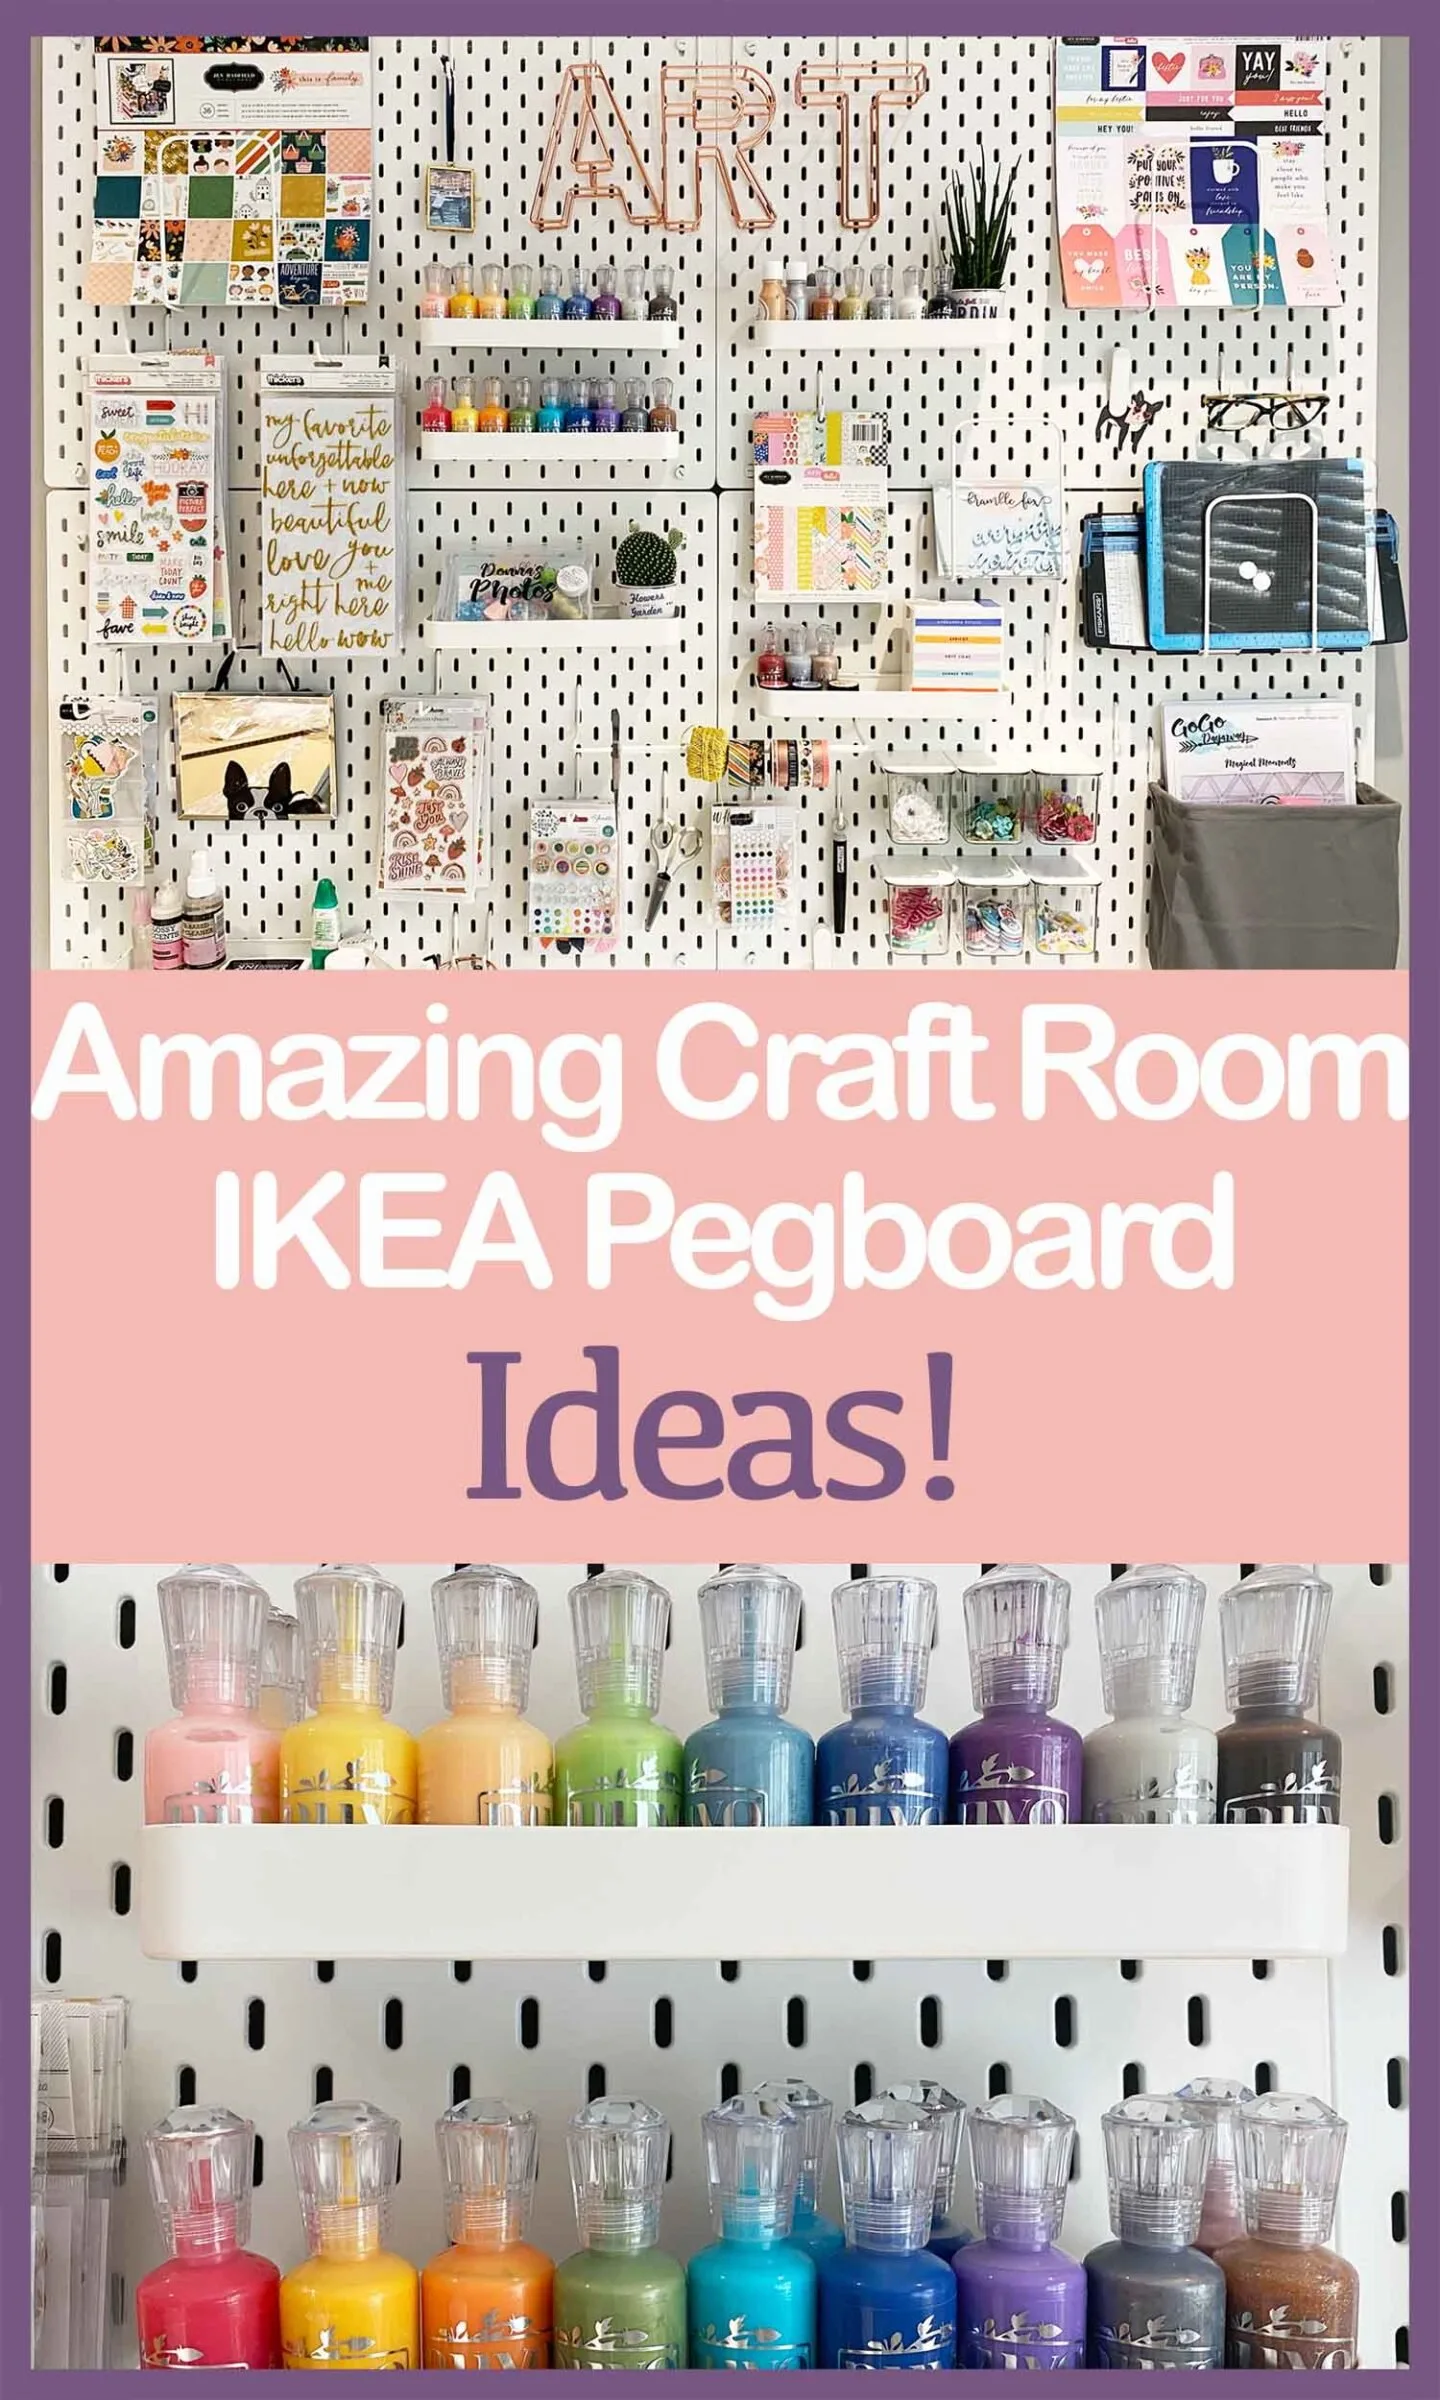 Amazing Ikea Pegboard Ideas for craft room 